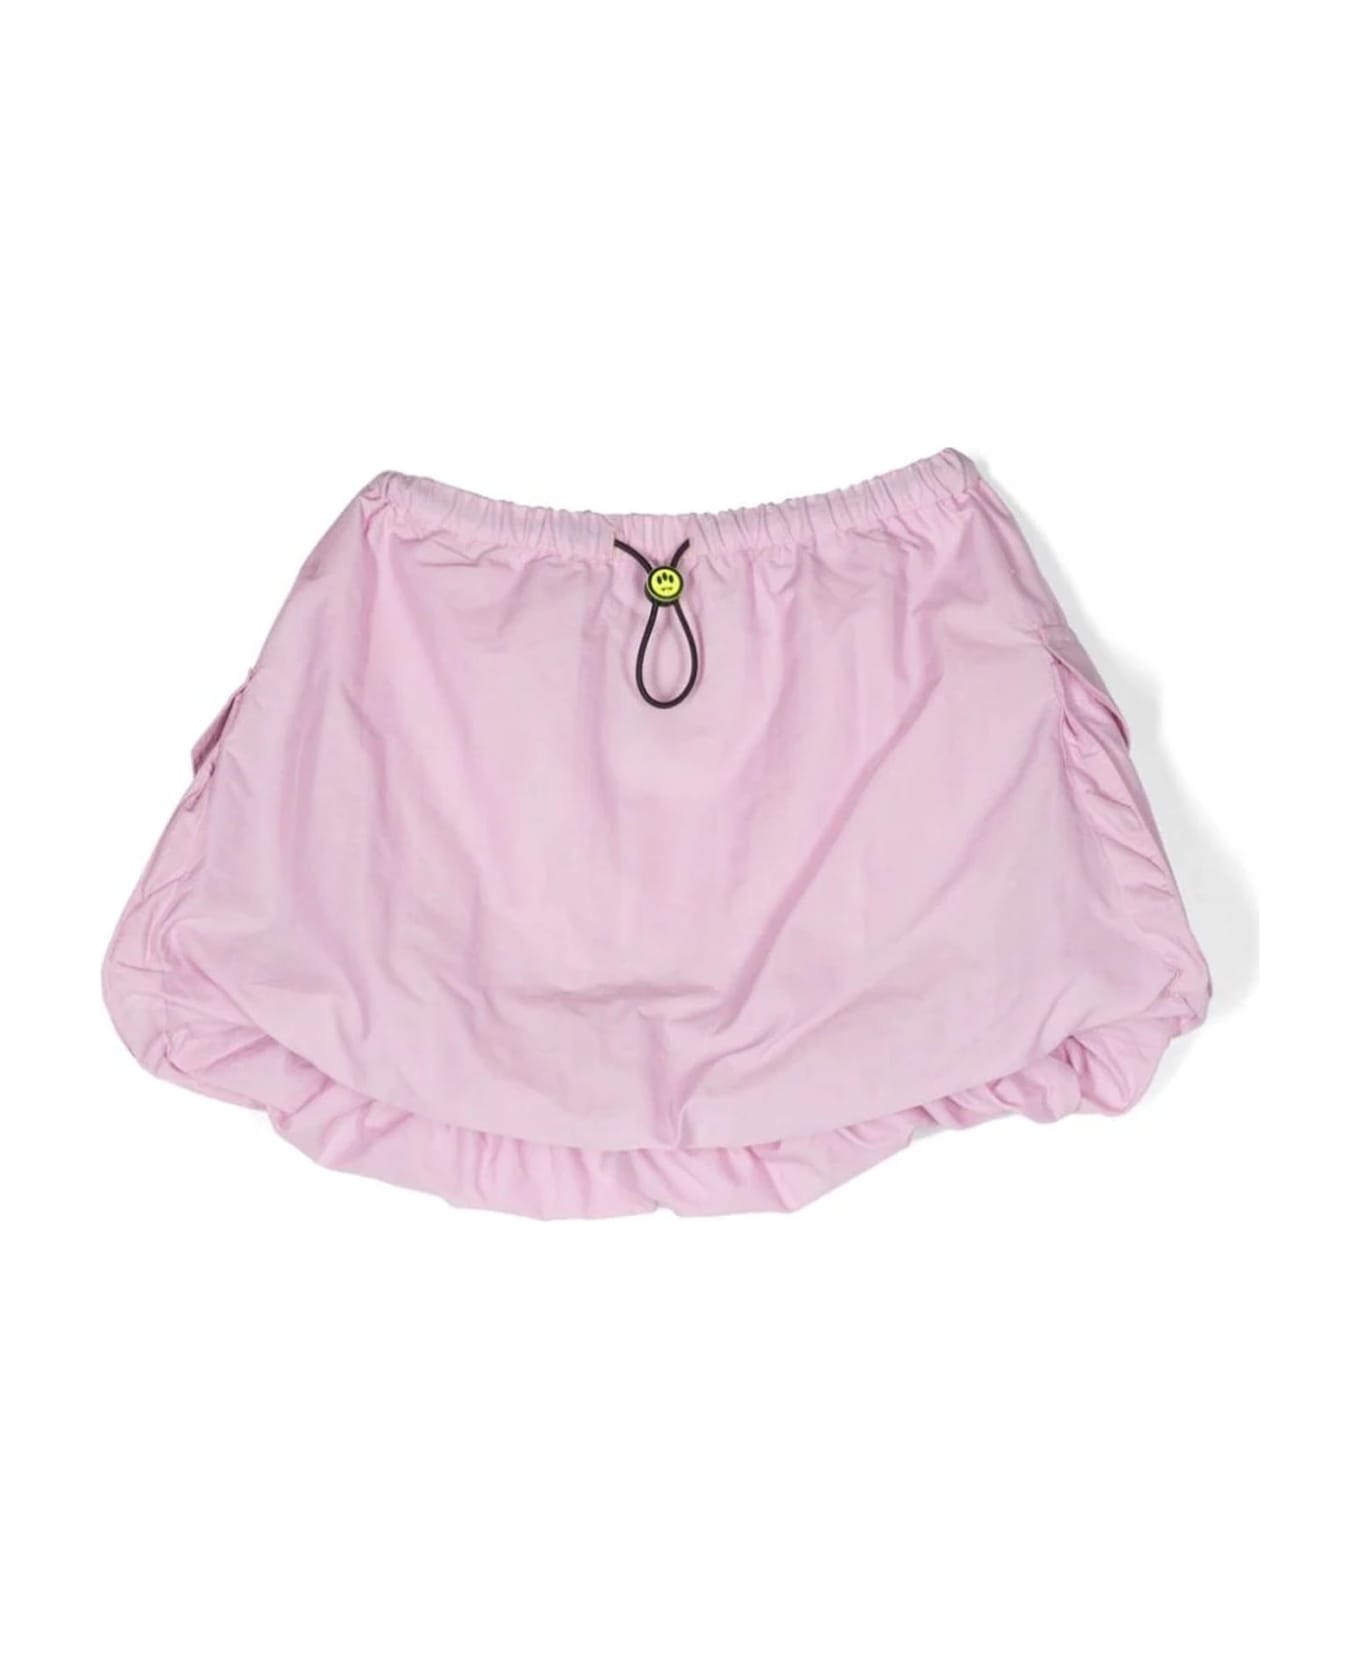 Barrow 's Skirts Pink - Pink